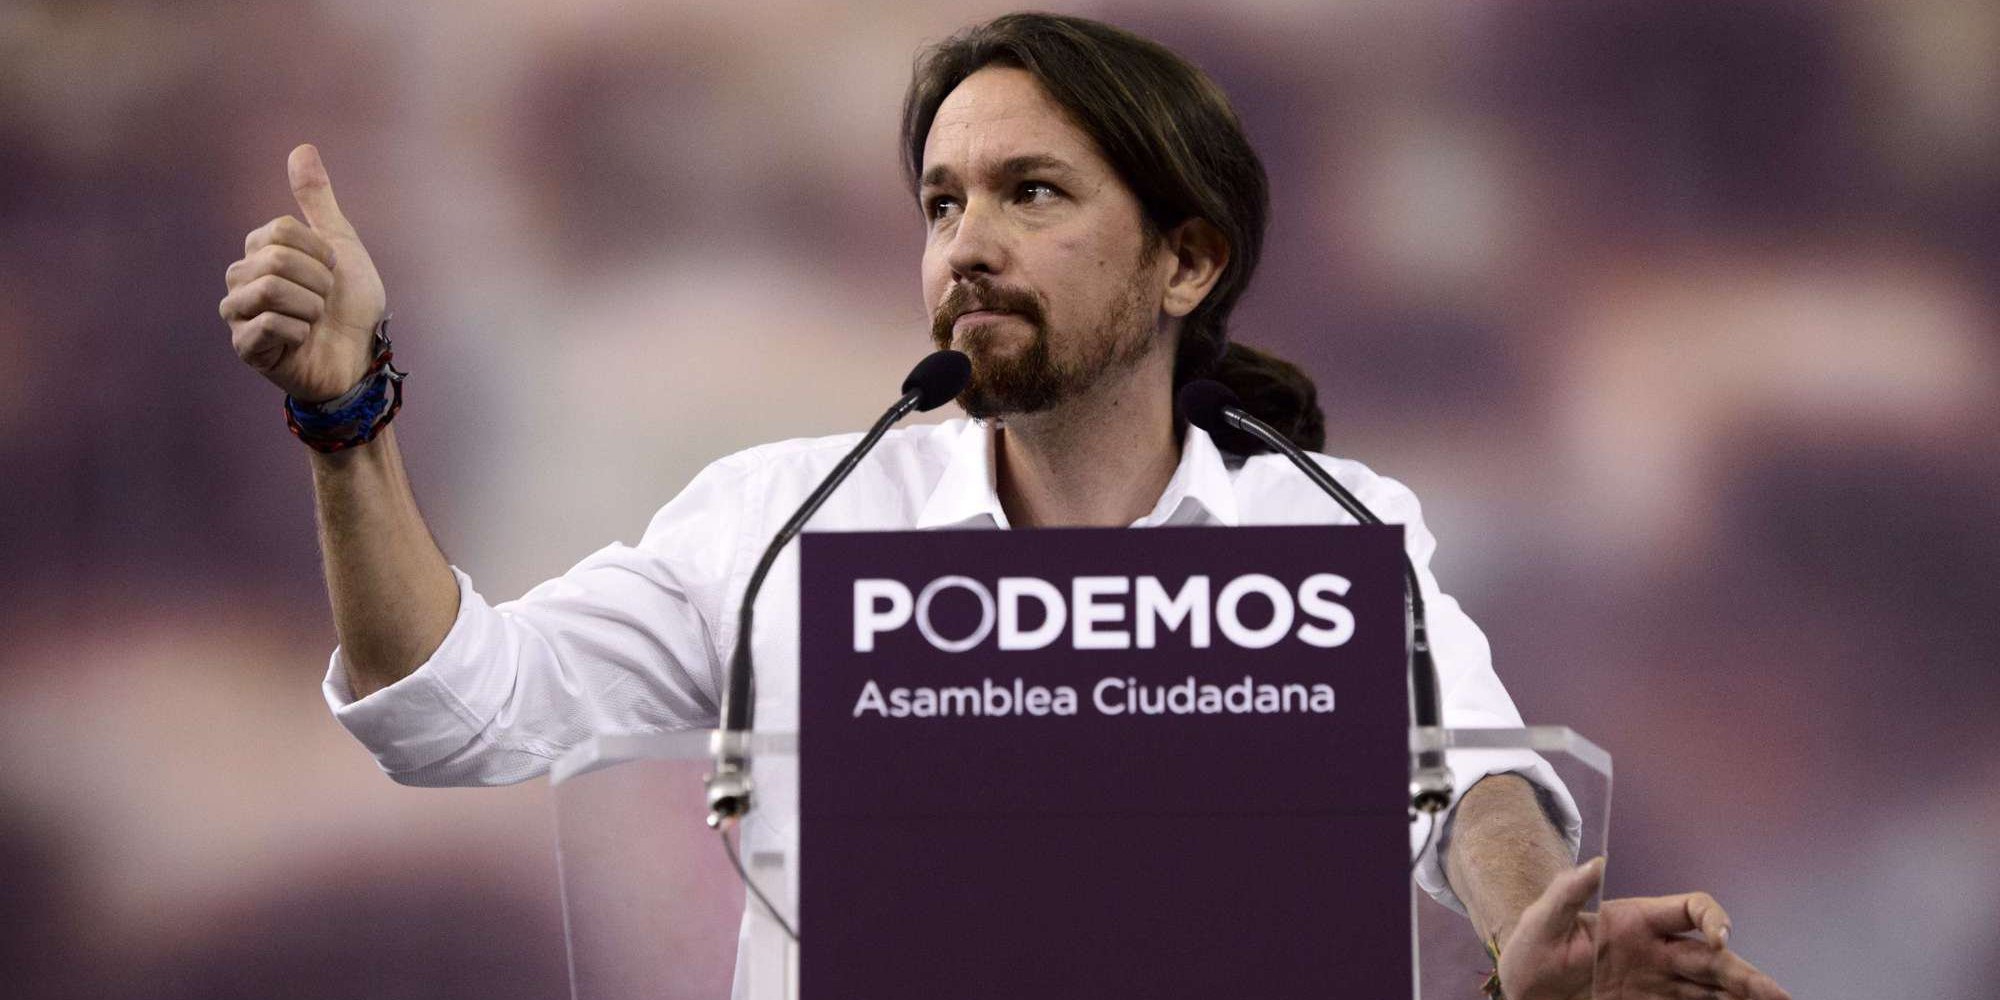 Podemos: Η δημοκρατία απόψε είναι πρωταγωνίστρια